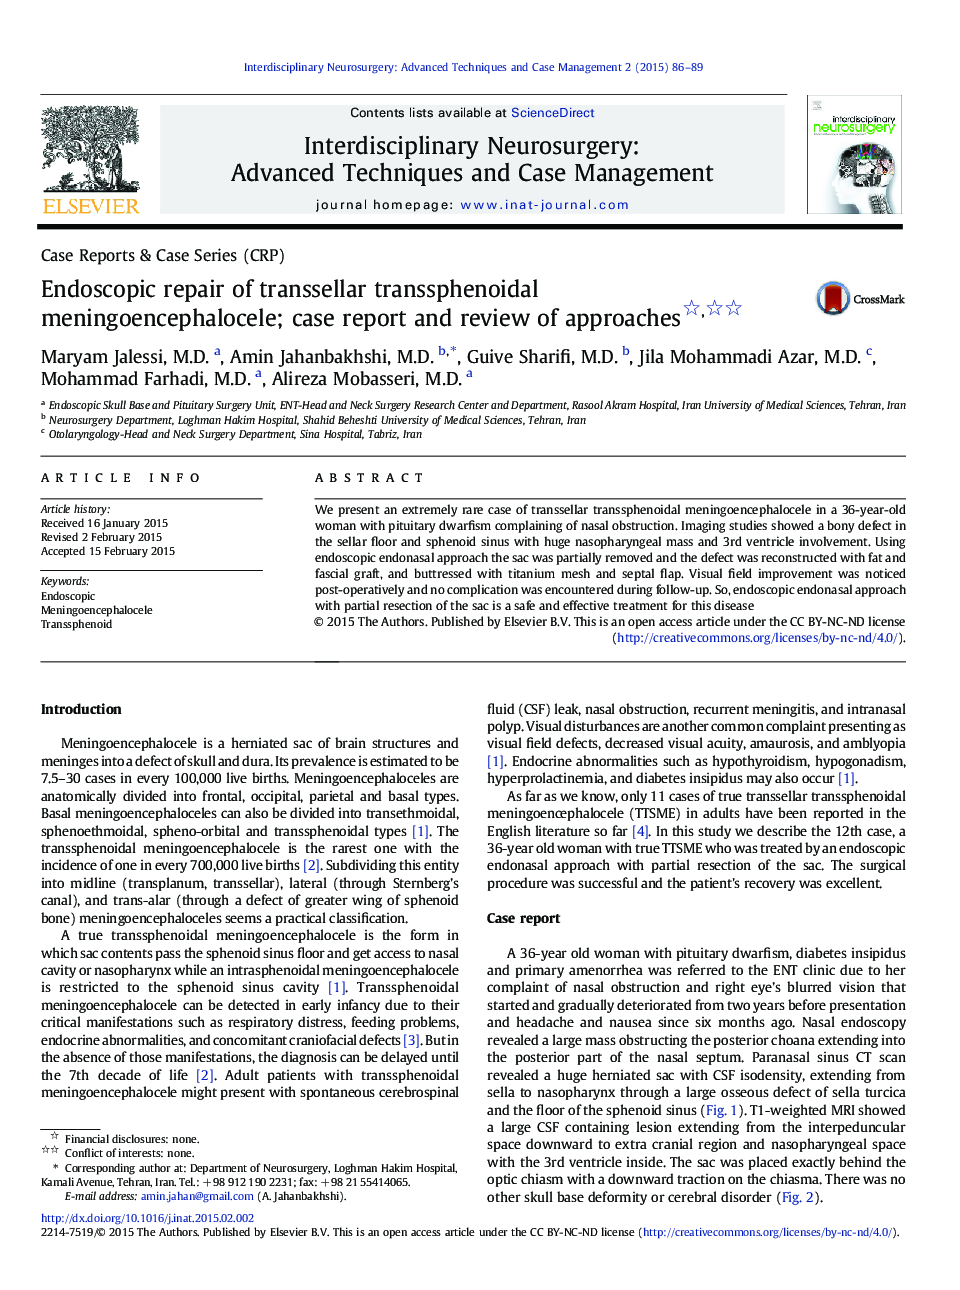 Endoscopic repair of transsellar transsphenoidal meningoencephalocele; case report and review of approaches 